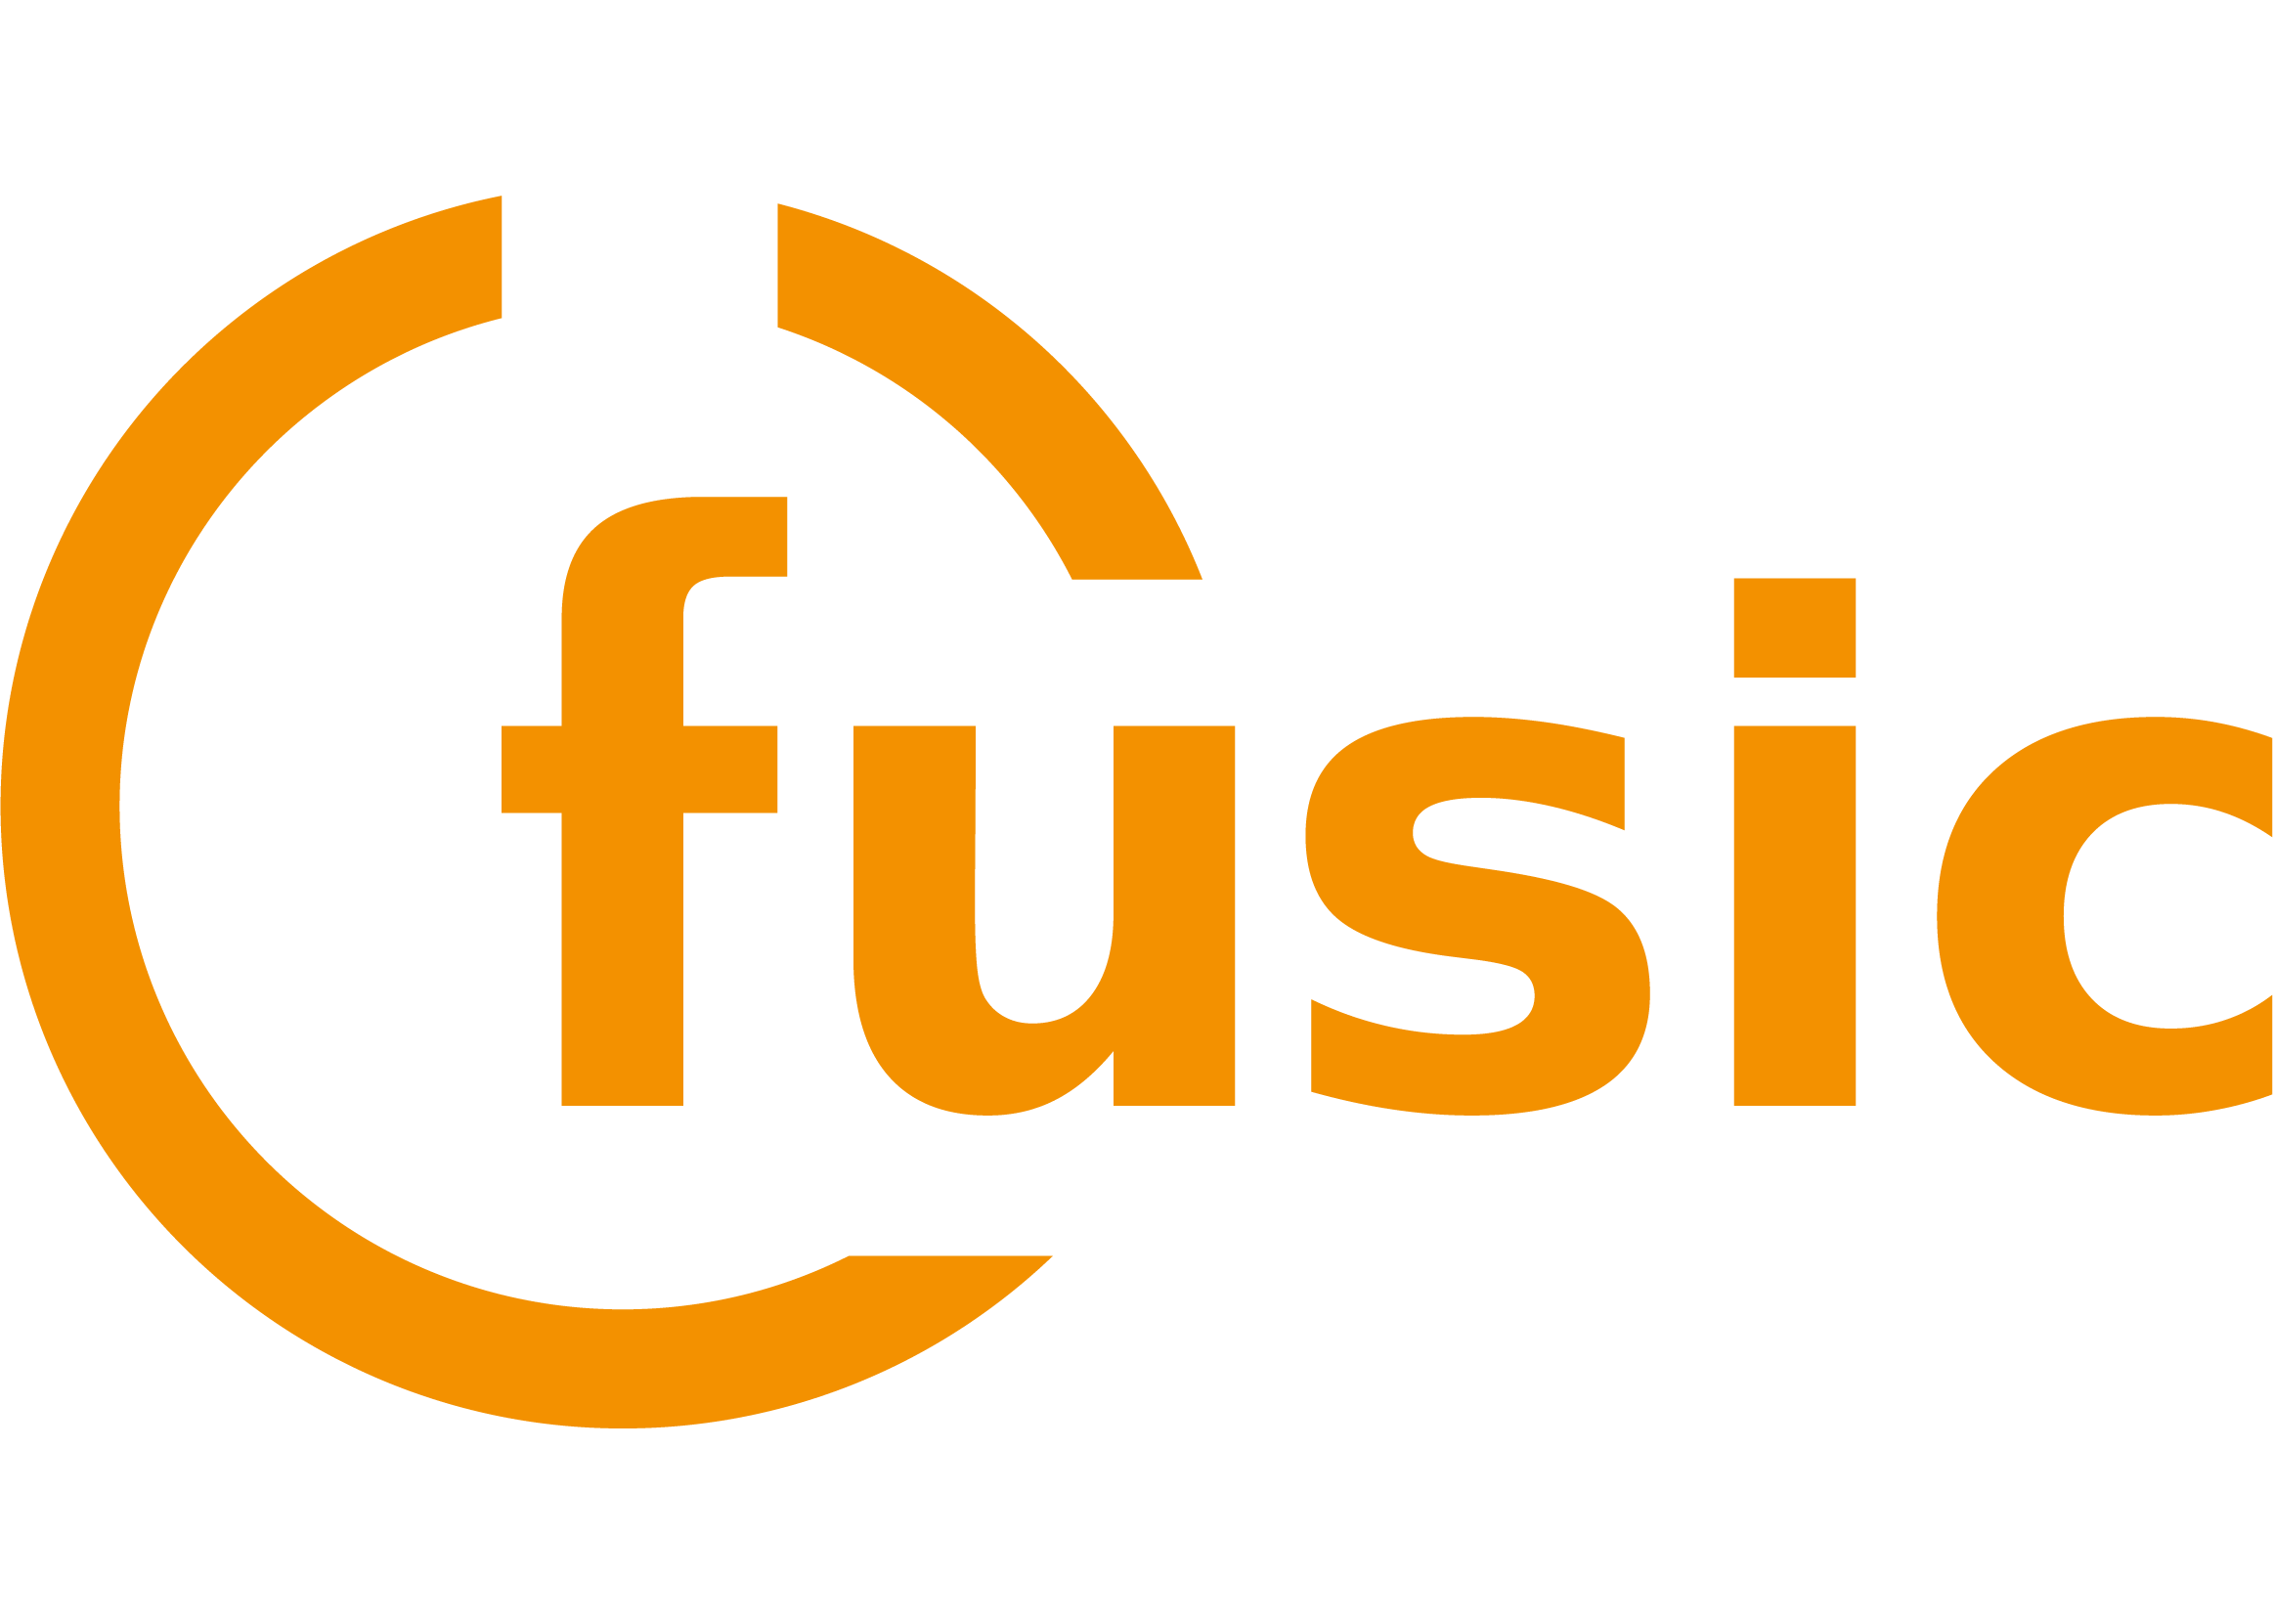 fusic - makes IT work